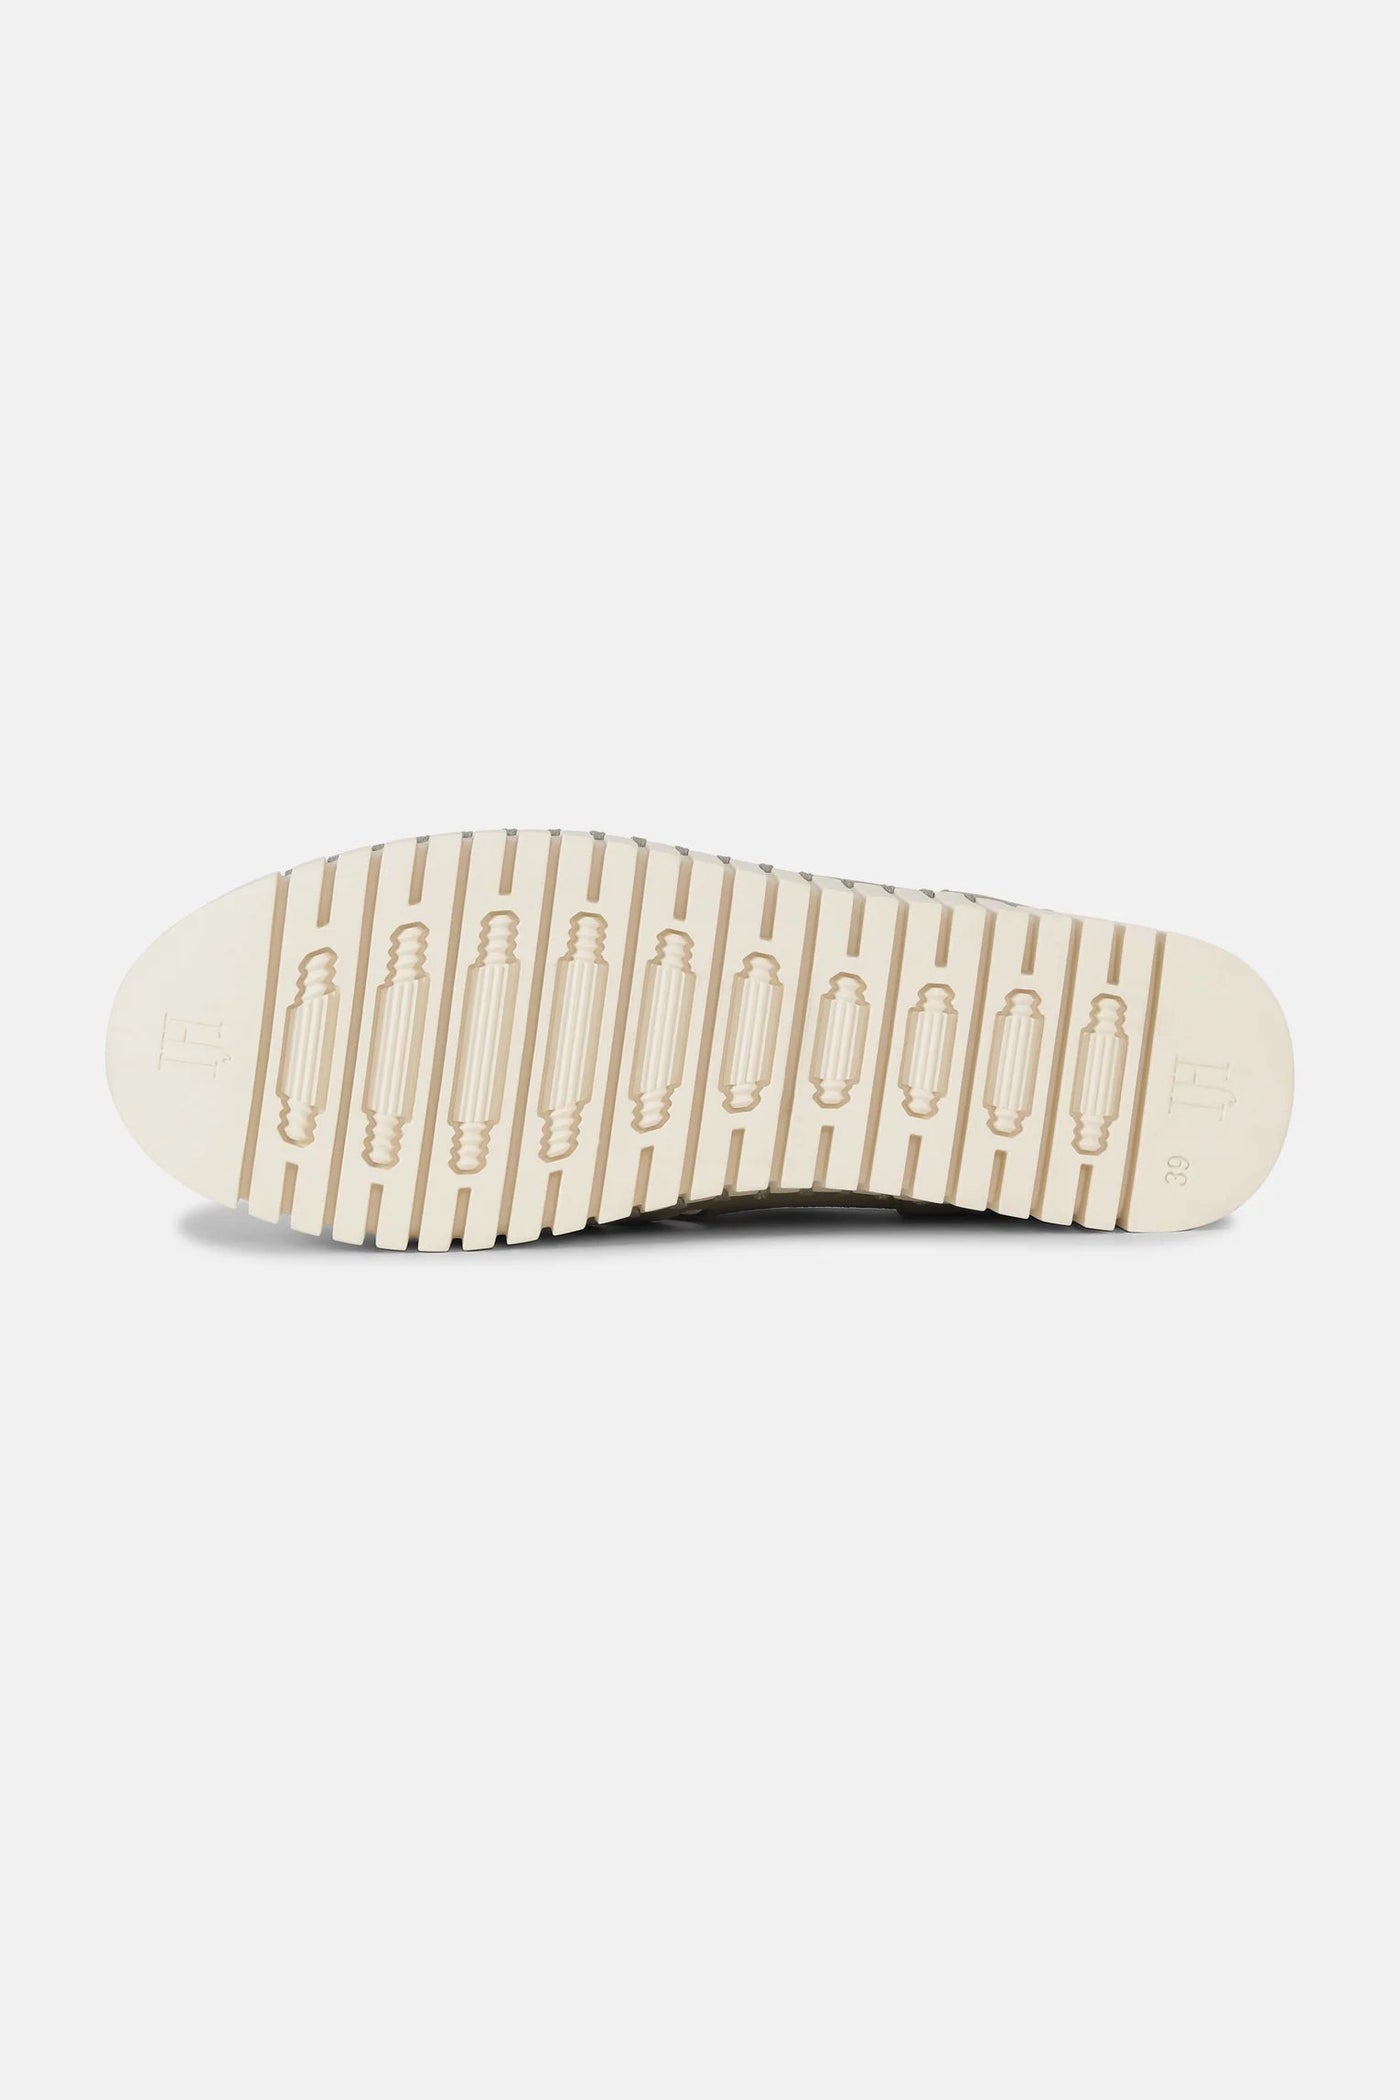 Ilse Jacobsen Platform Sandals - Army-Accessories-Ohh! By Gum - Shop Sustainable